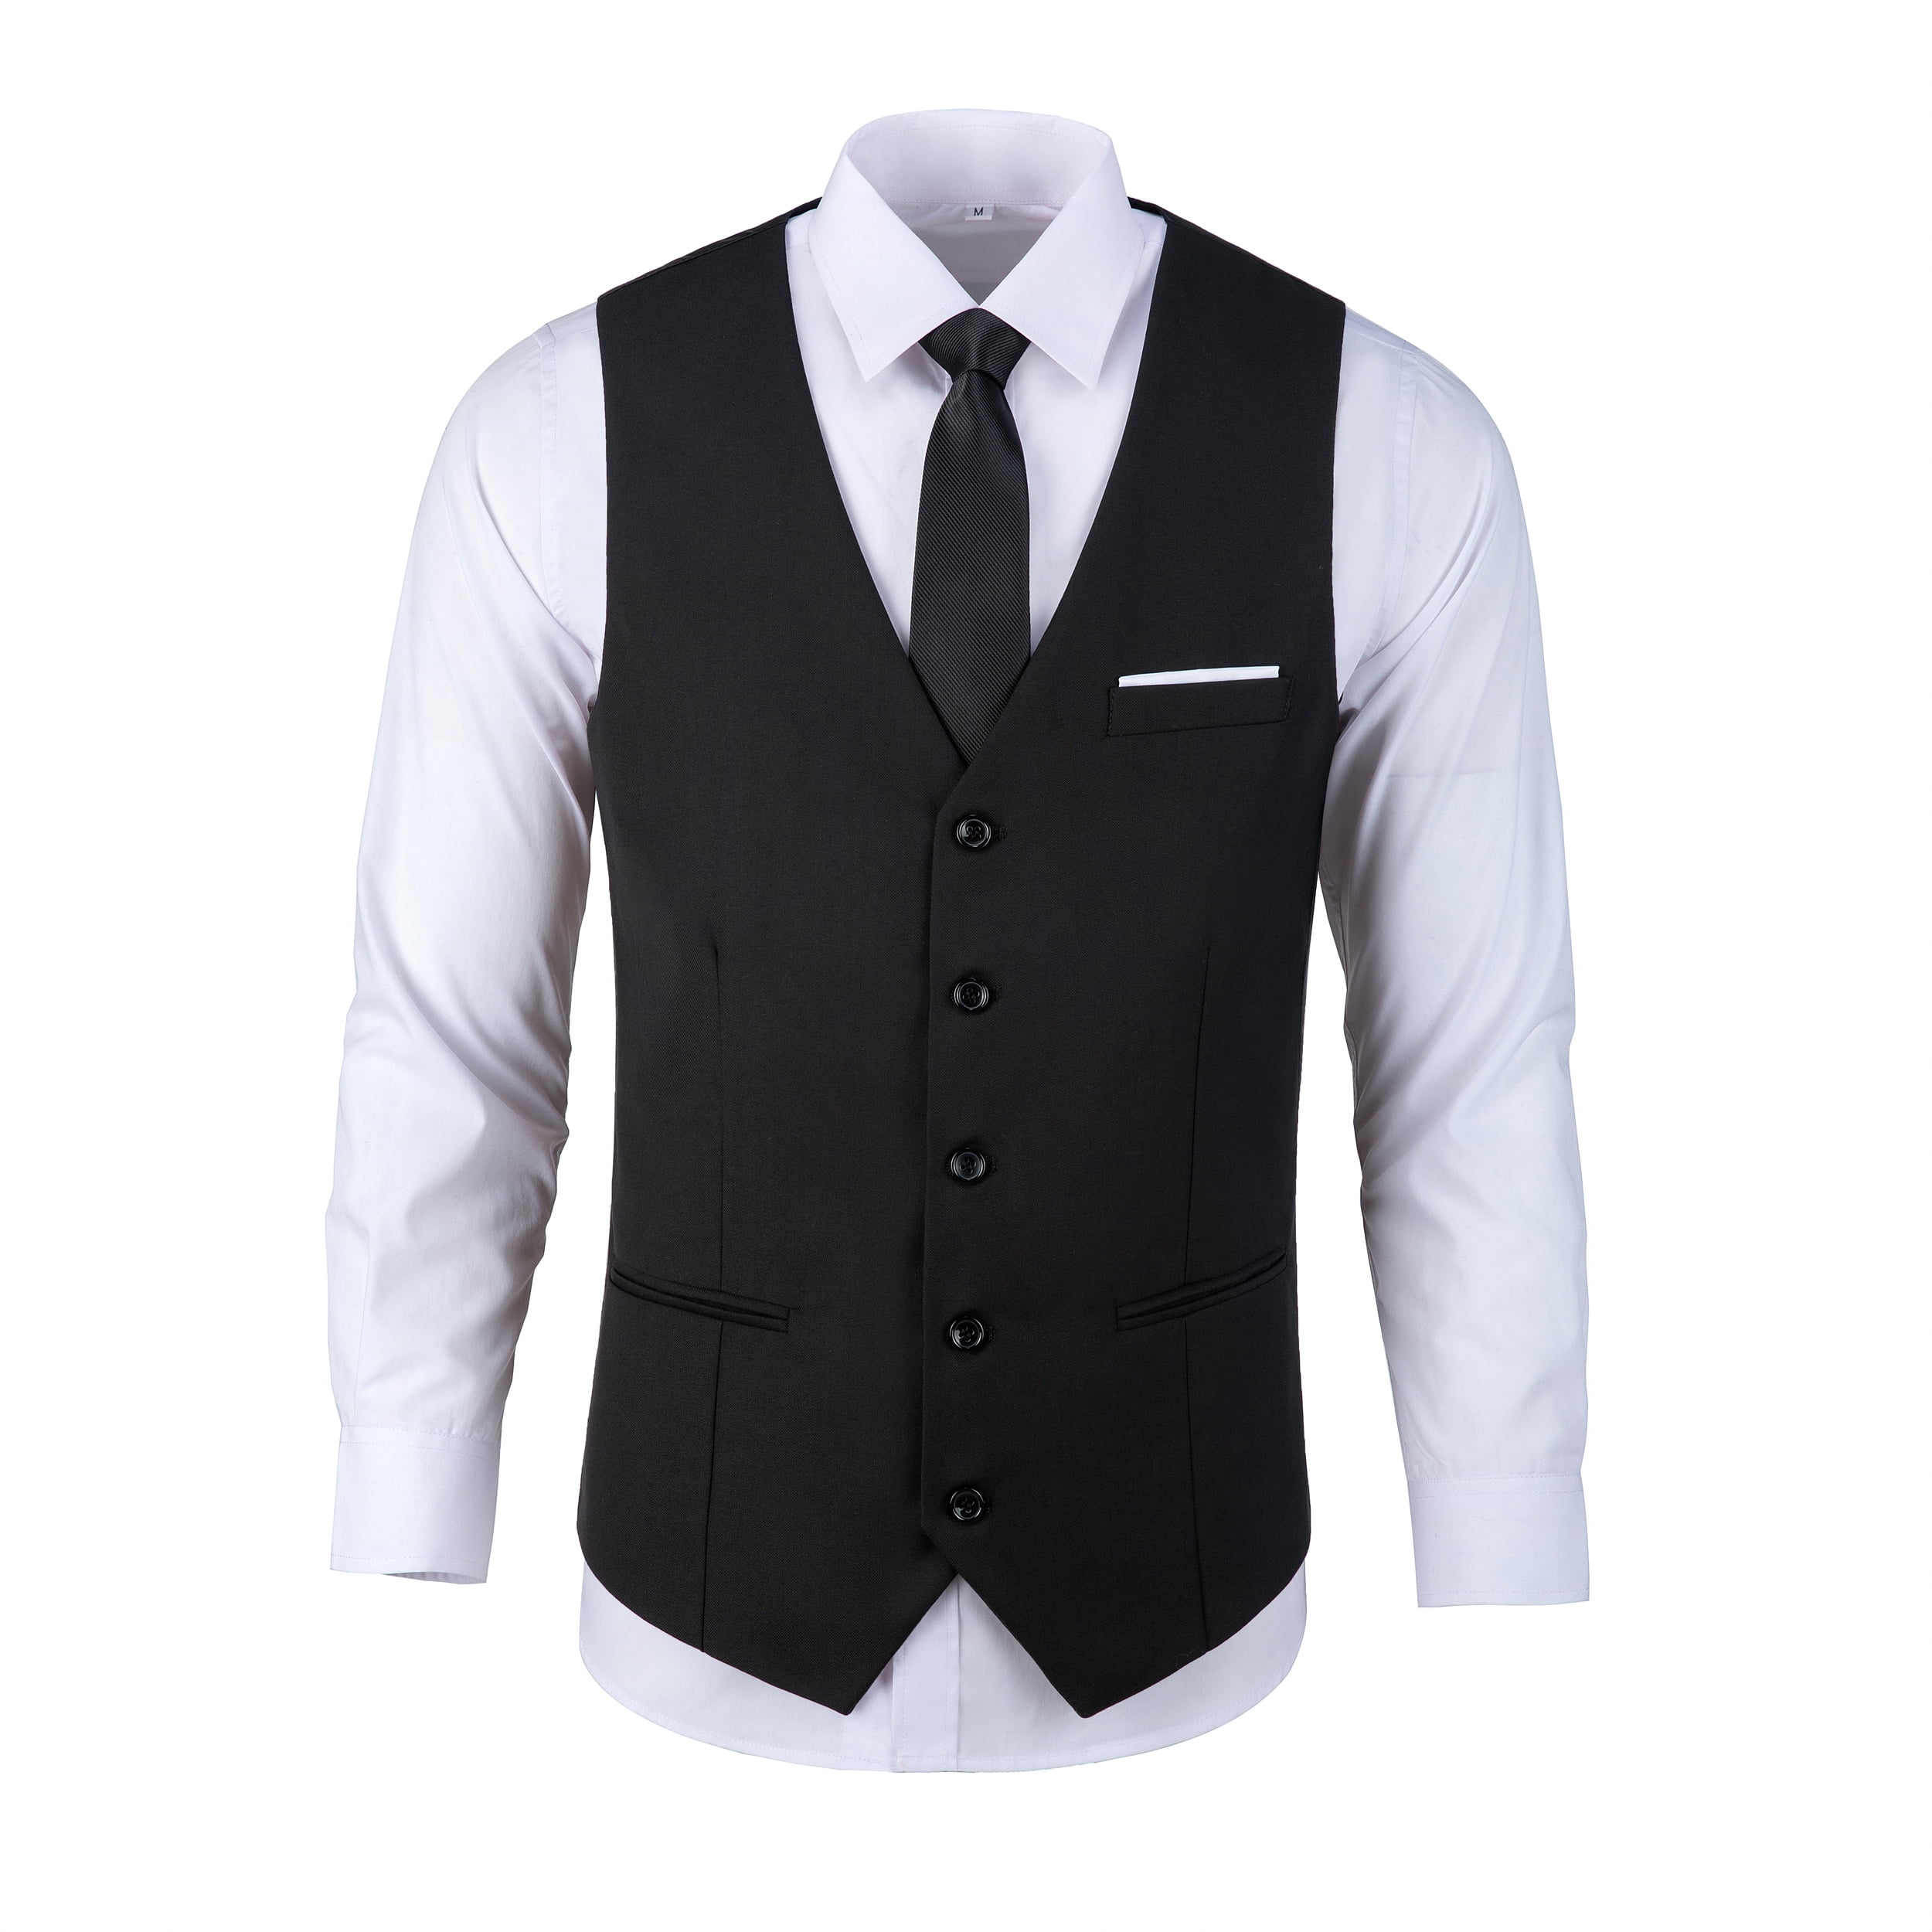 Wehilion Men's Suit Vest Black Business Formal Dress with 3 Pockets ...